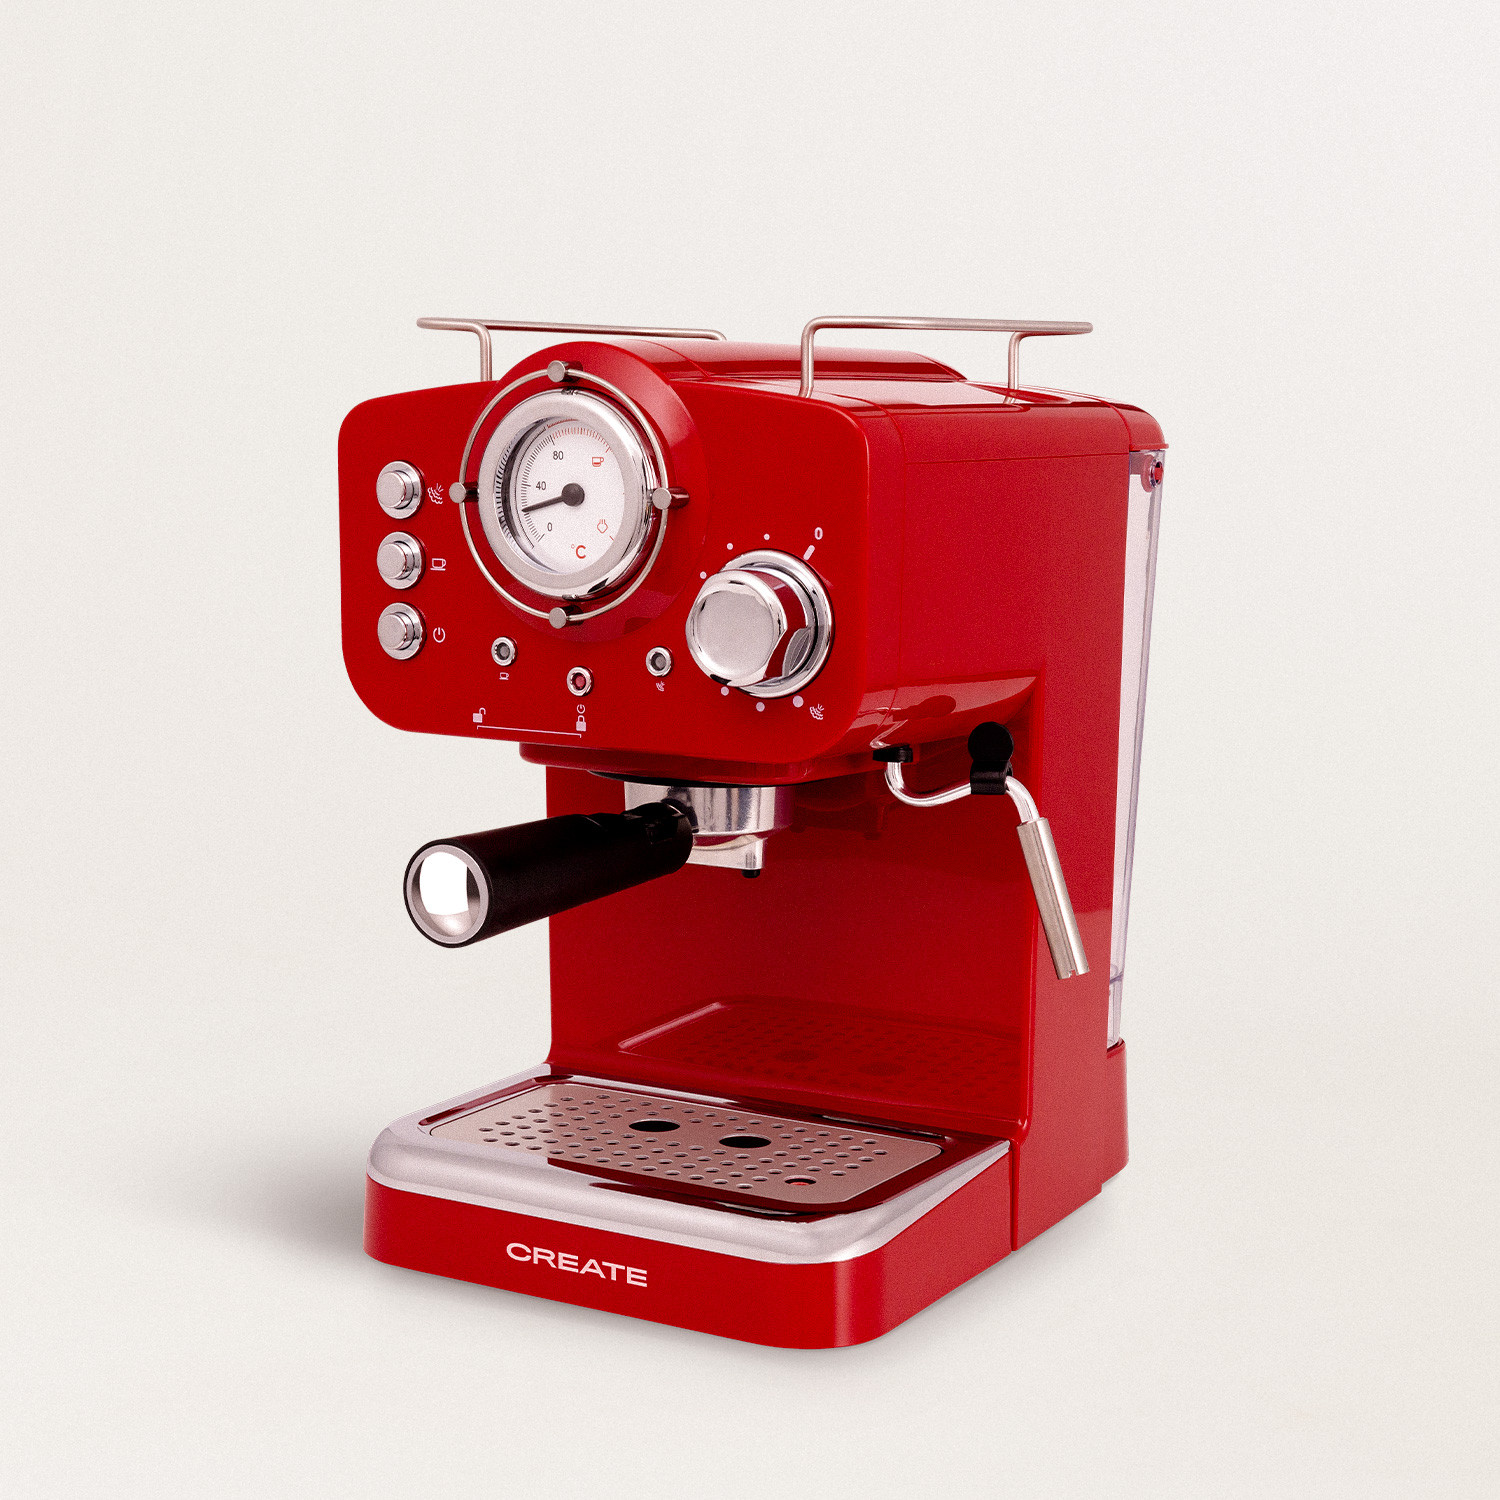 Cafetera espresso THERA retro IKOHS Vintage Rojo 1100W 15bar 2 salidas  vapor boquilla Cappuccino – SQUARE ELECTRONICO